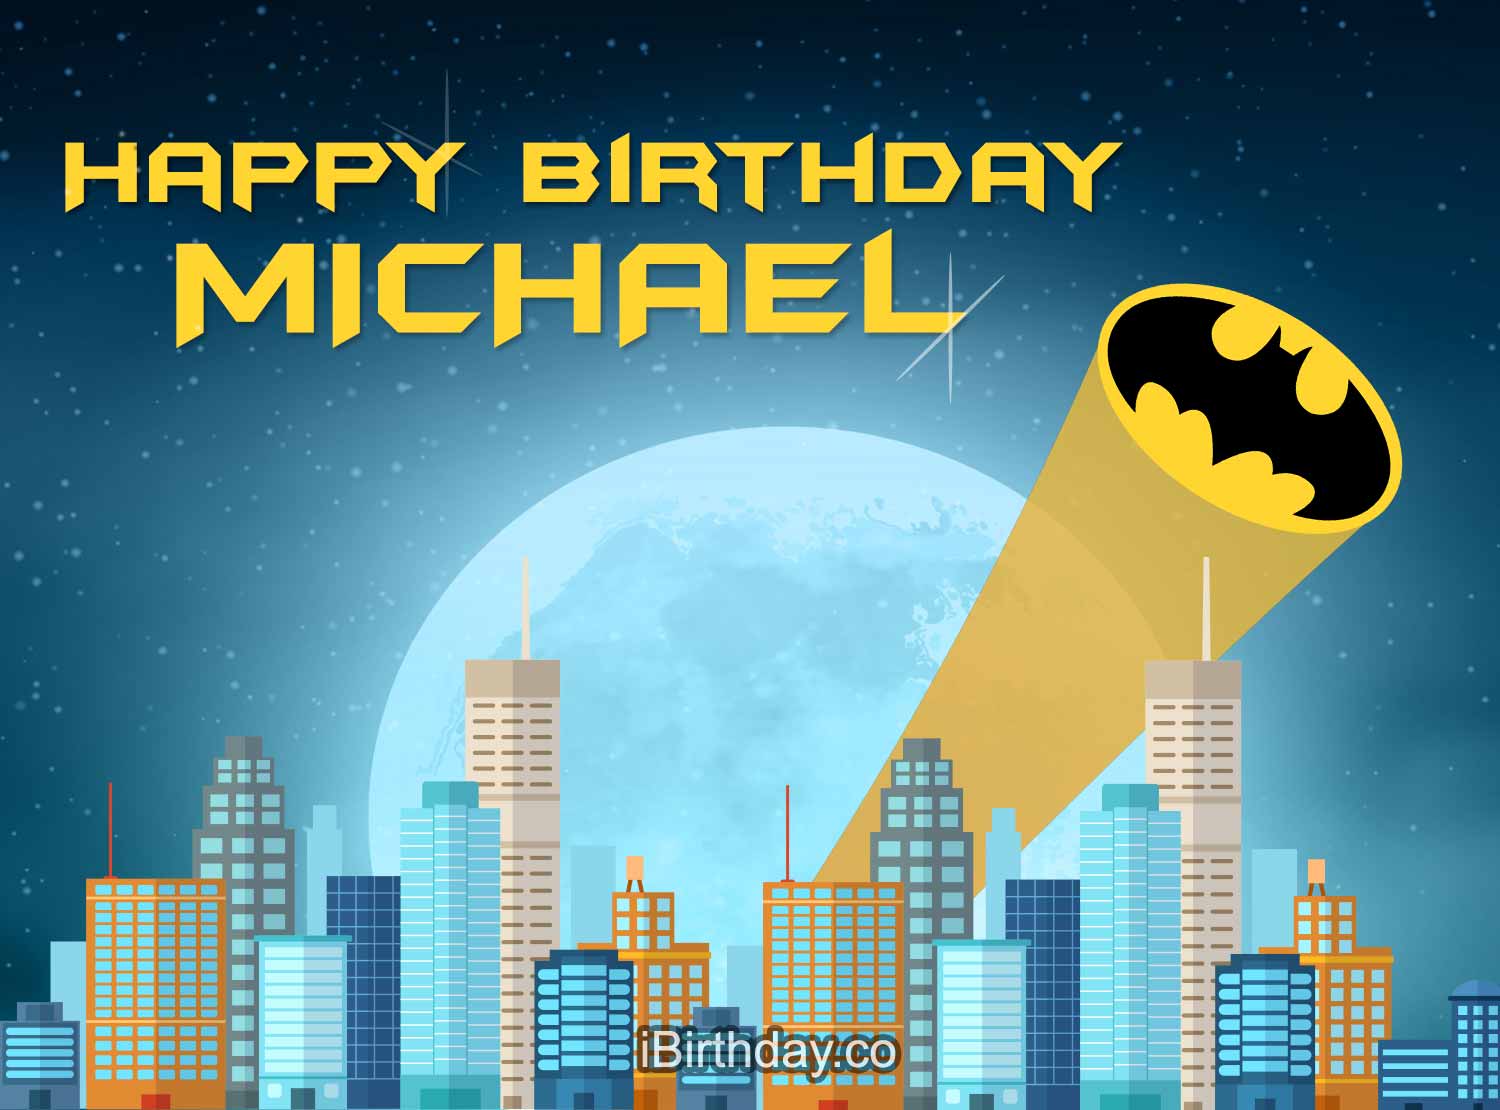 happy-birthday-to-you.net/happy-birthday-michael-memes-wishes-quotes. hel.....